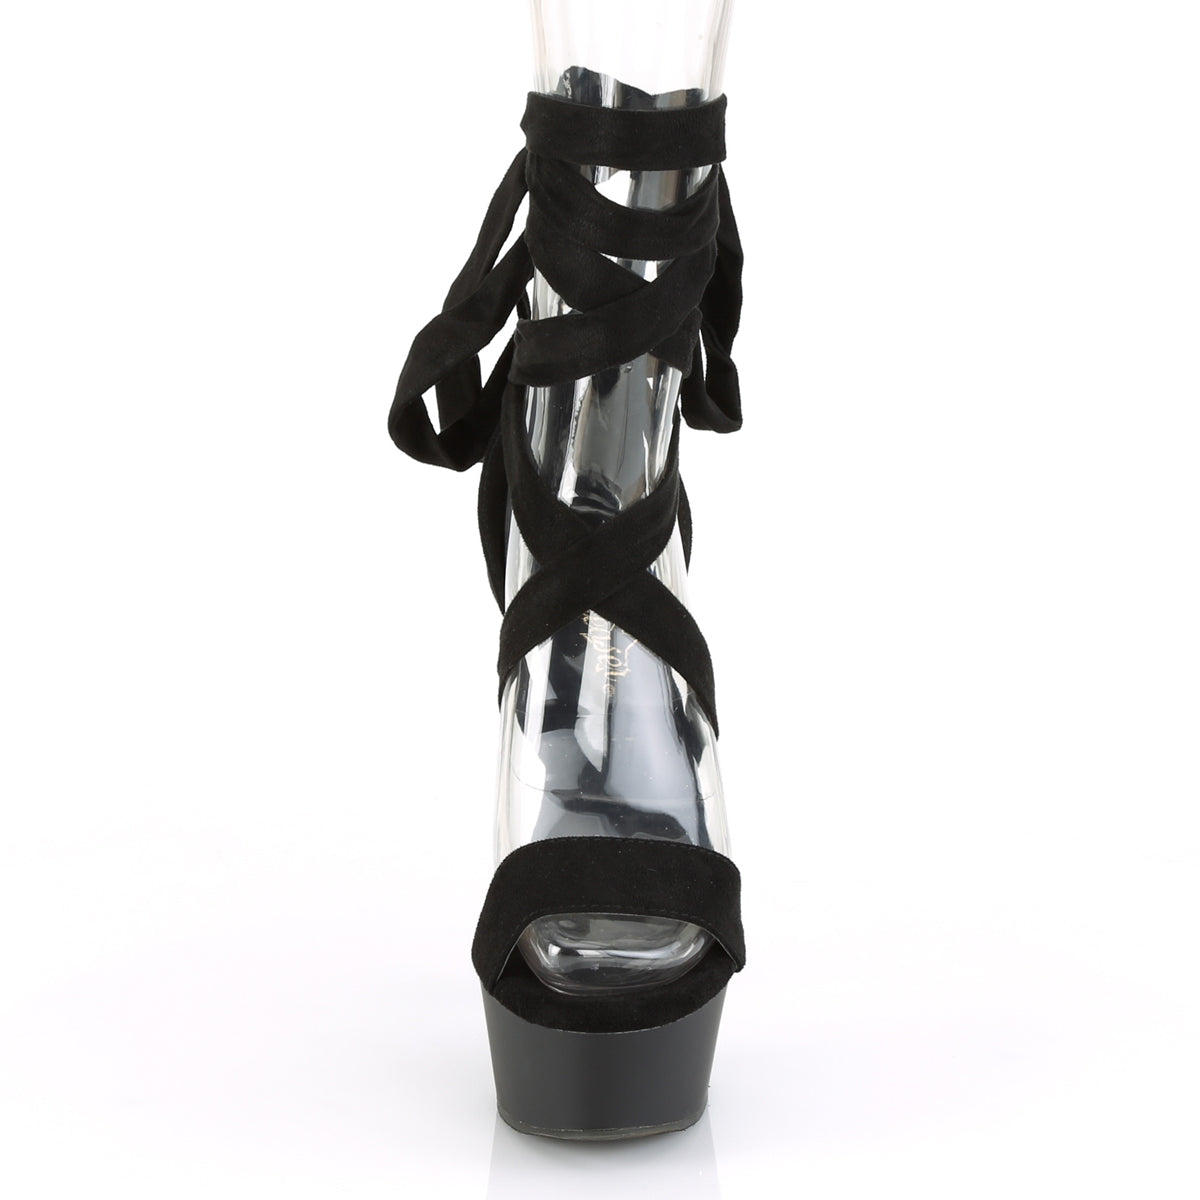 DELIGHT-671 Pleaser 6 Inch Heel Black Pole Dancing Platform-Pleaser- Sexy Shoes Alternative Footwear